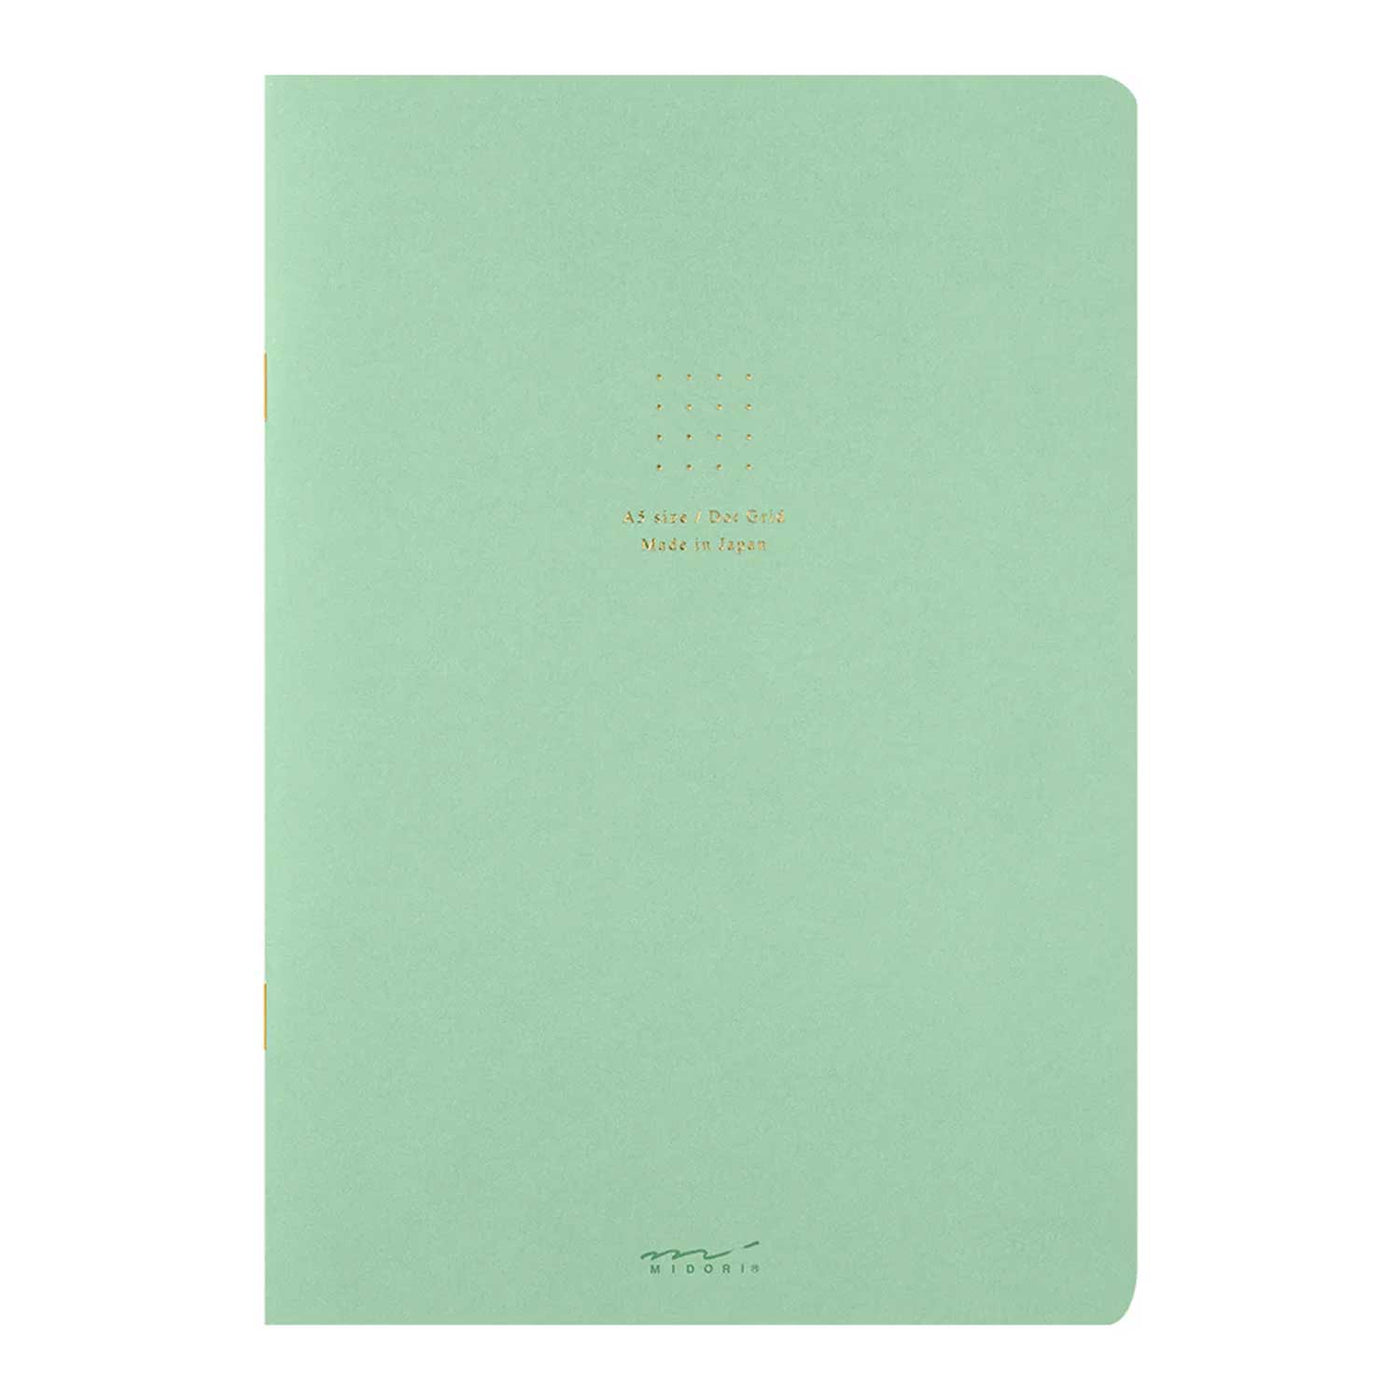 Midori Soft Colour Green Notebook - A5 Dotted 1